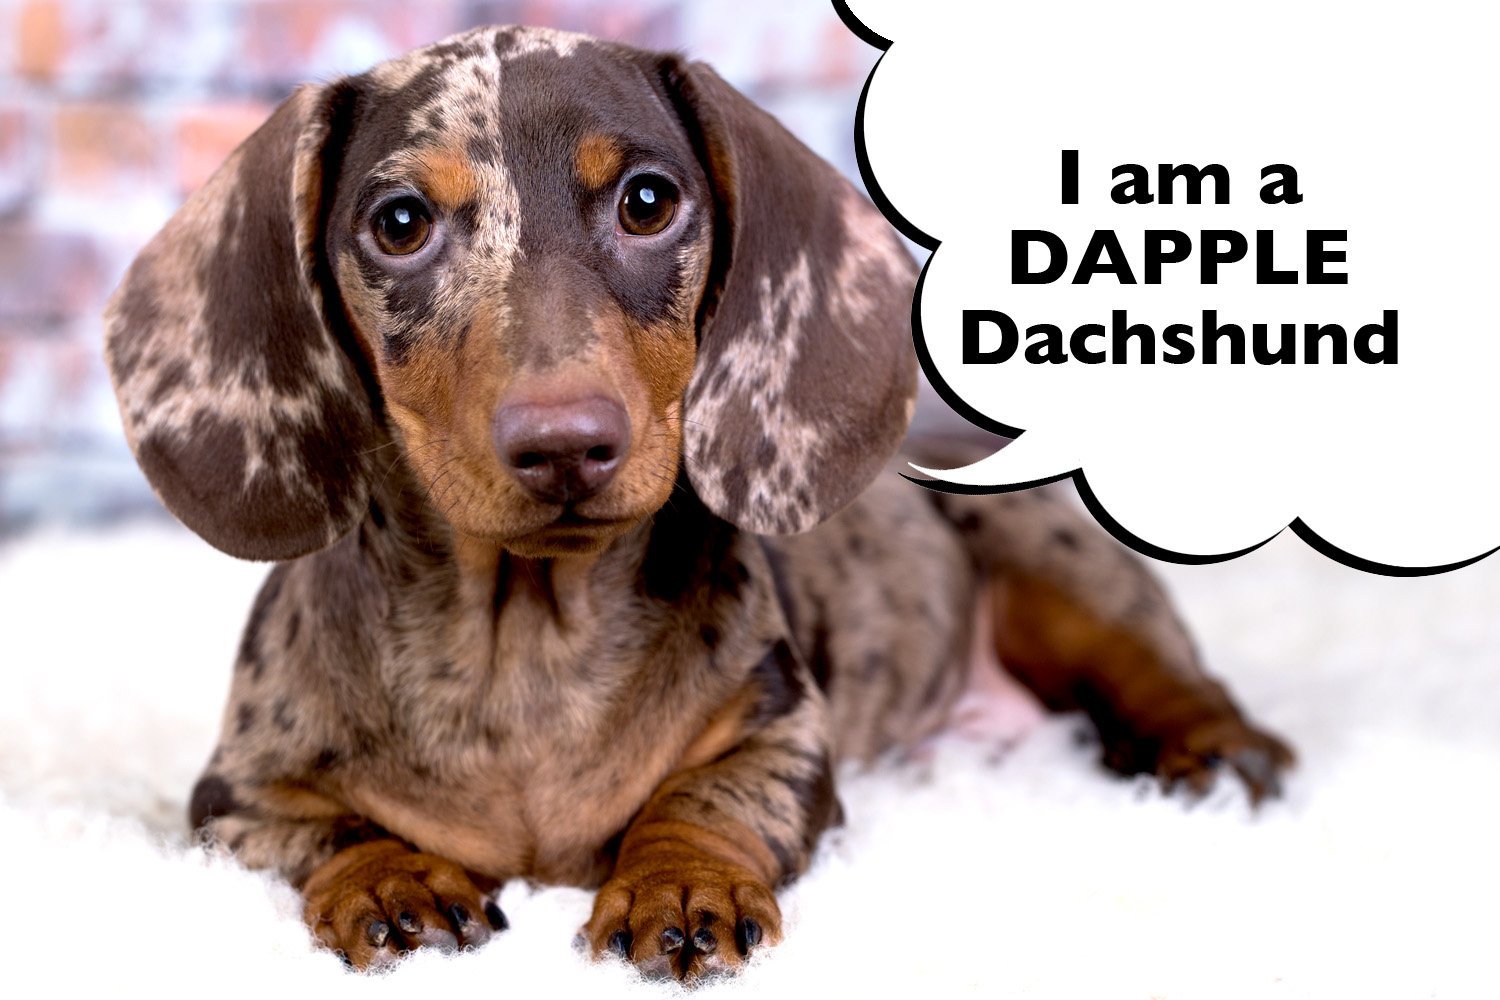 dachshund-dapple.jpg